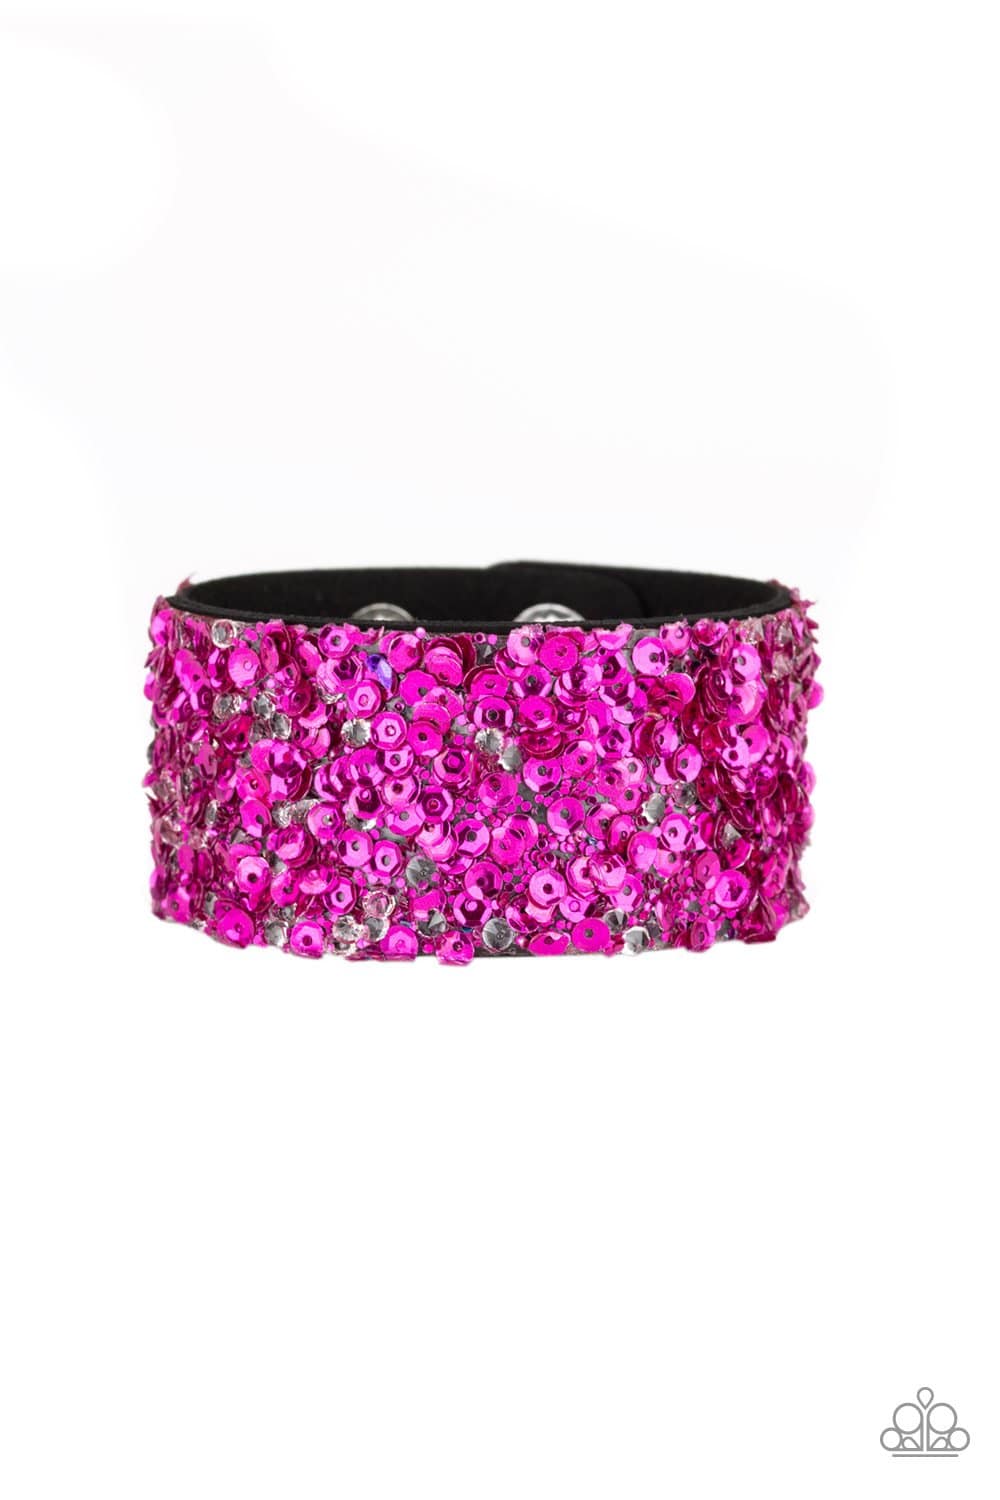 Starry Sequins - Pink Rhinestone Bracelet - Paparazzi Accessories - GlaMarous Titi Jewels